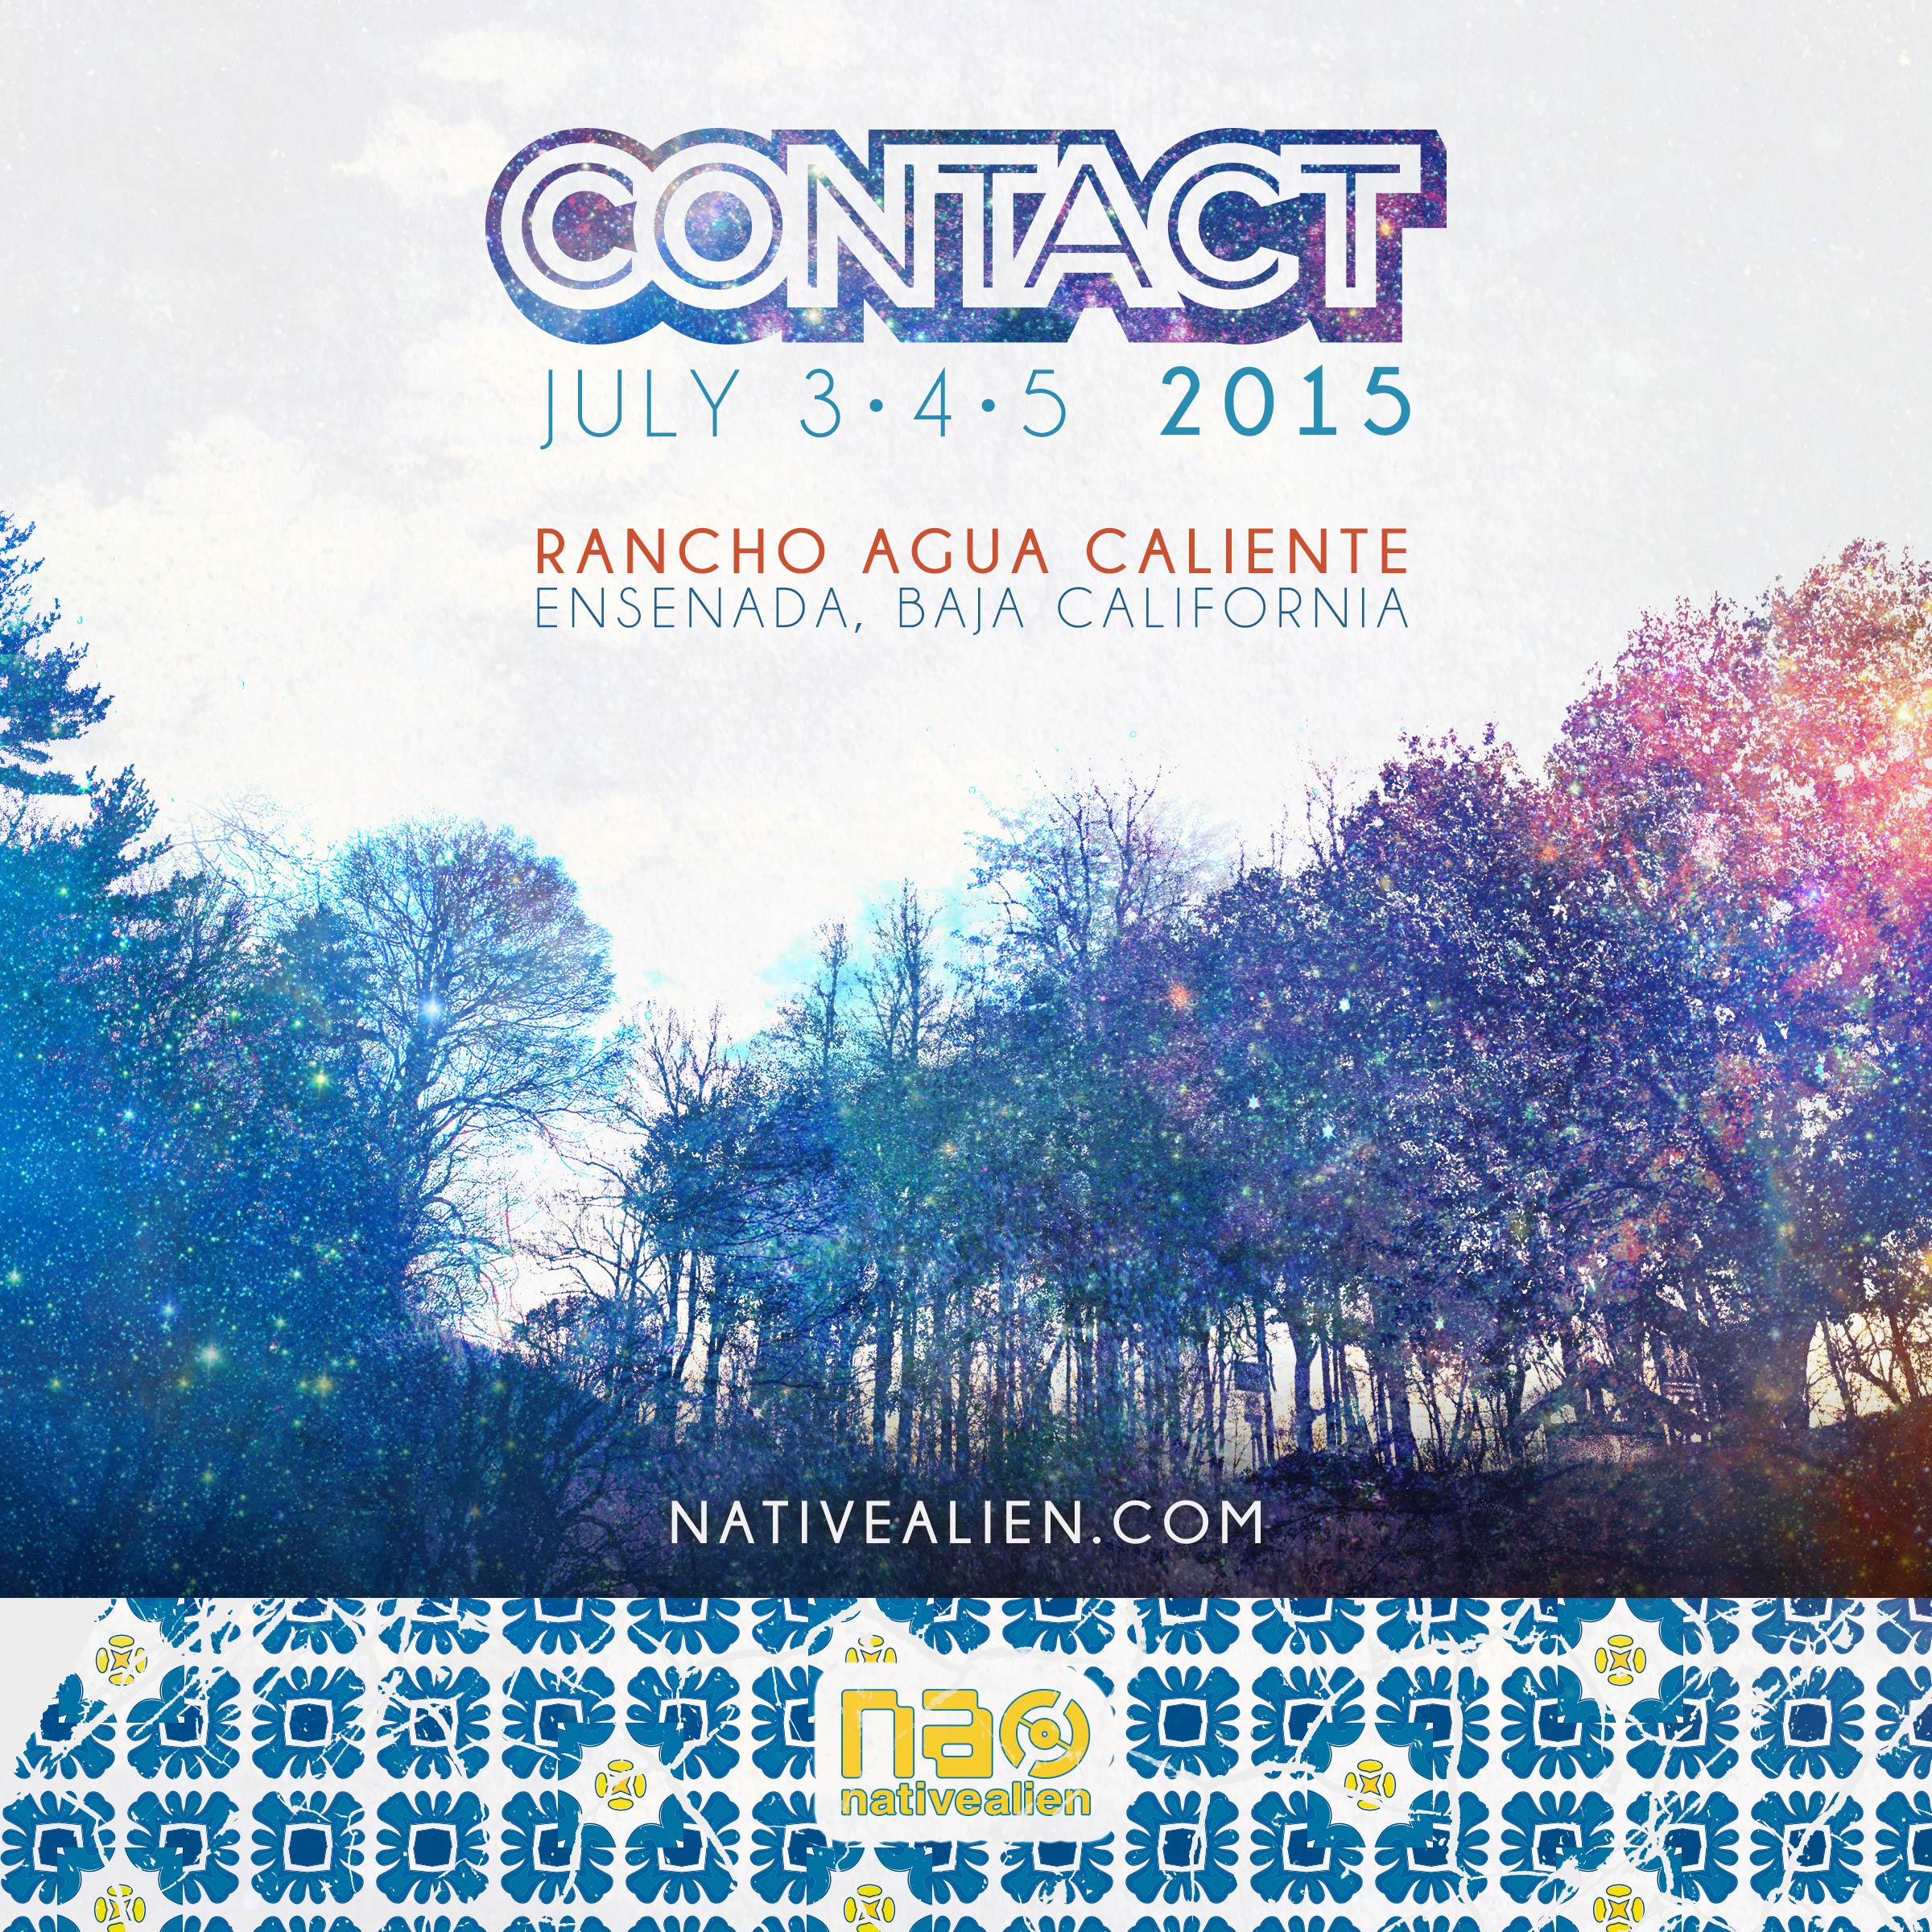 native-alien-contact-2015-3